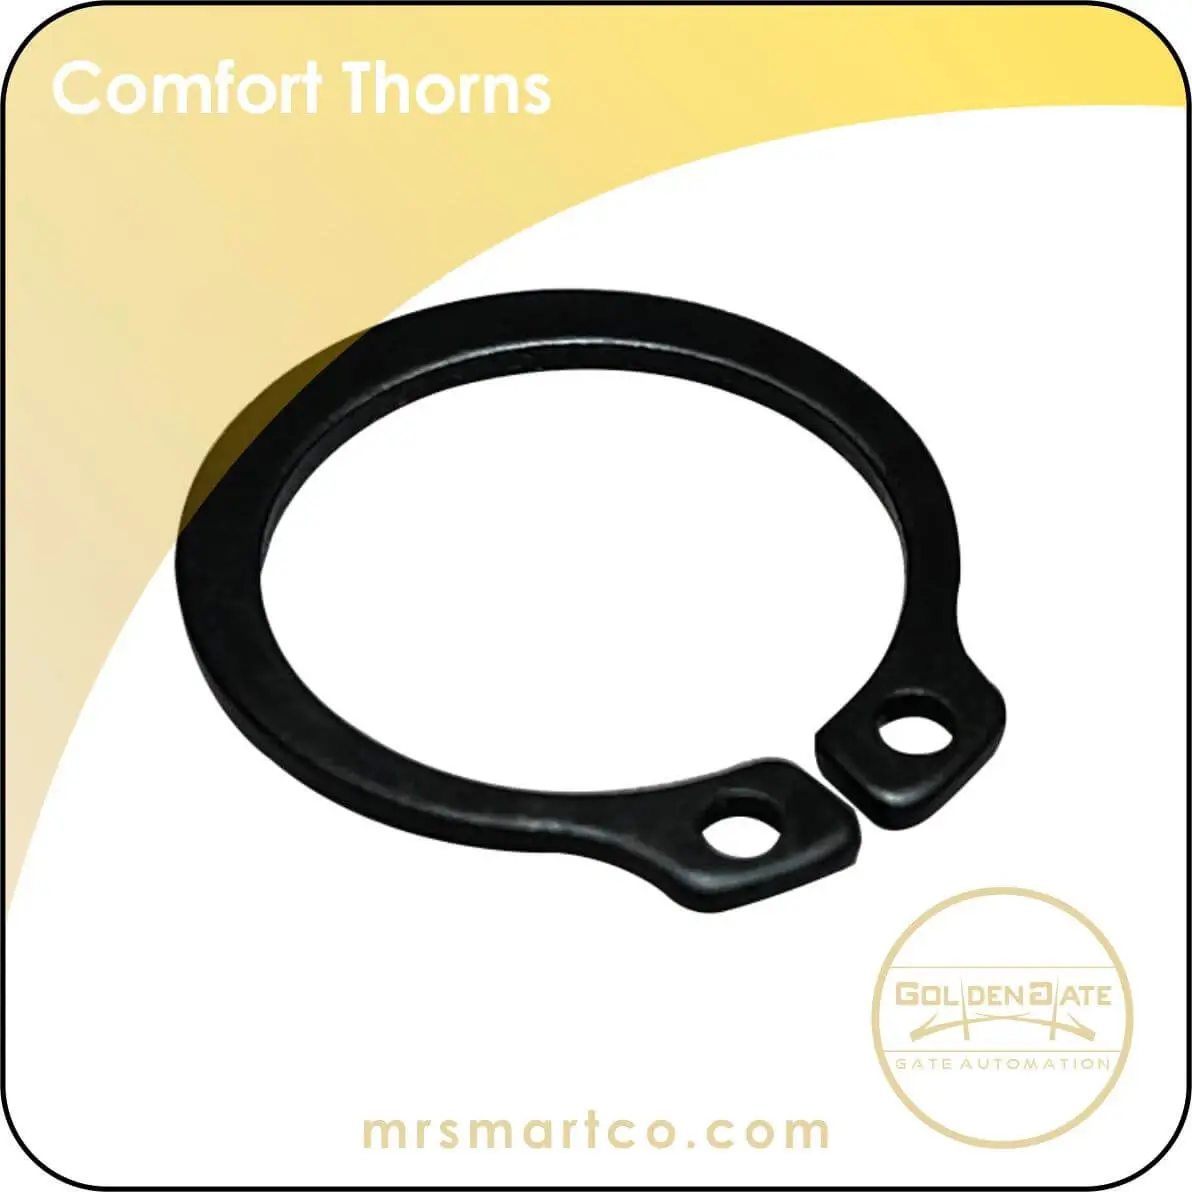 comfort thorn